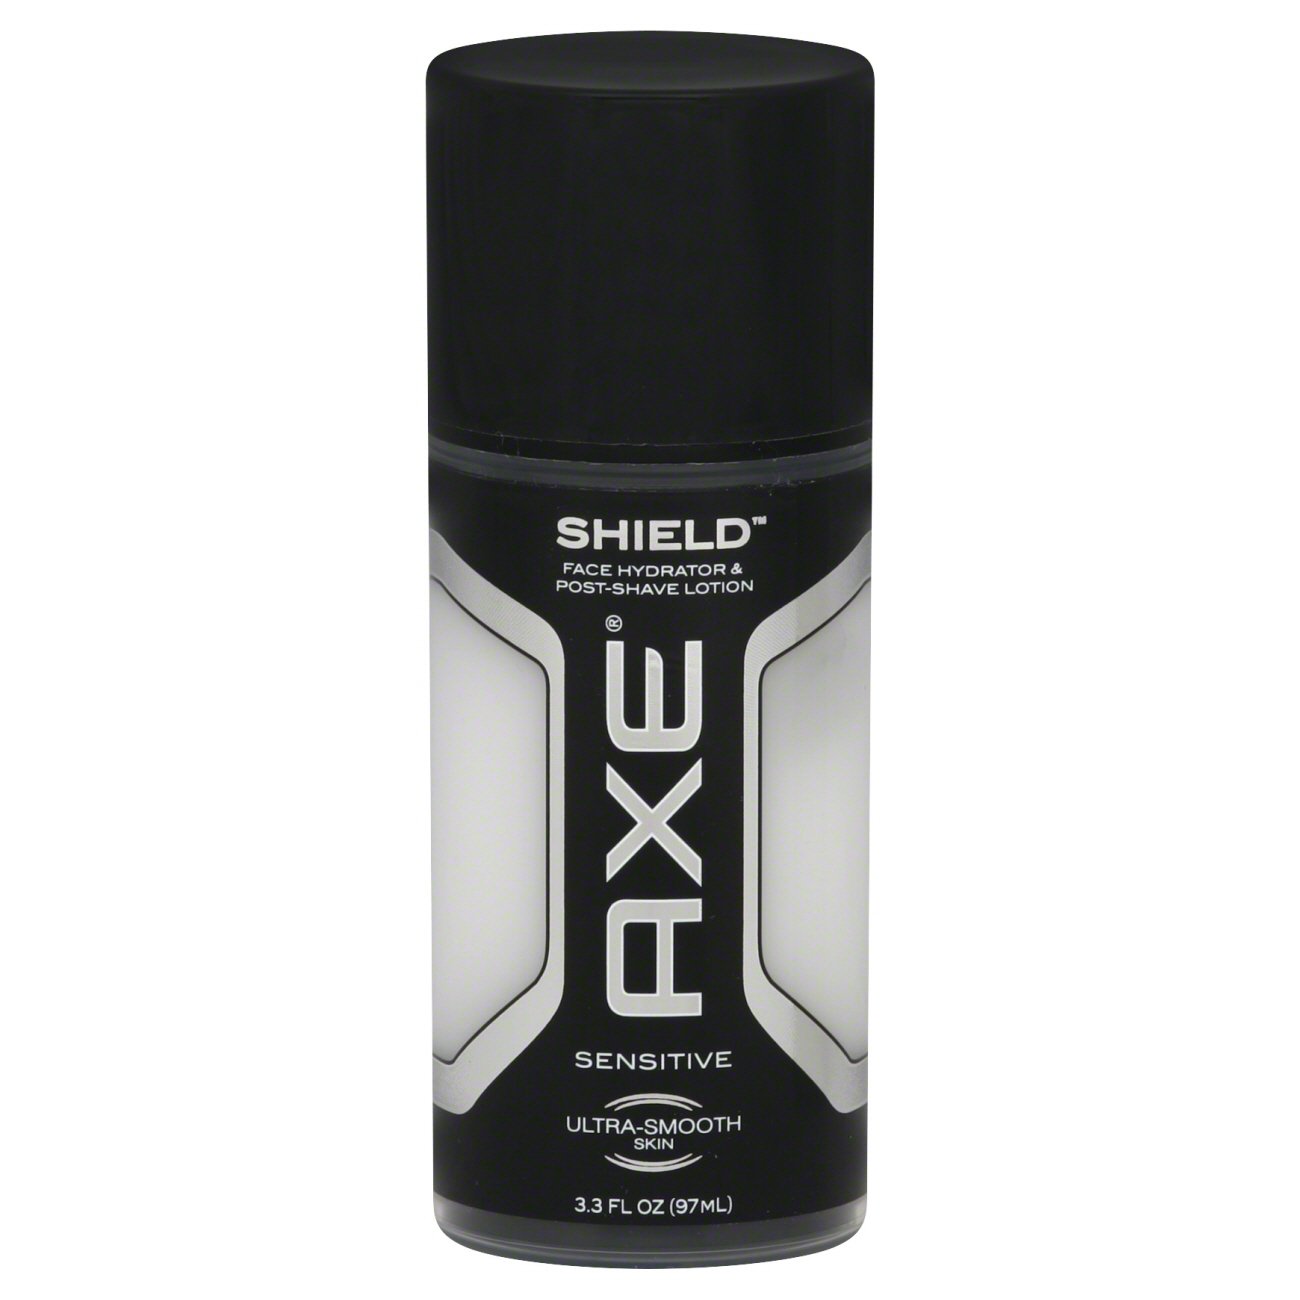 Shield Sensitive Hydrator and Post-Shave Lotion - Shop Bath & Skin Care H-E-B